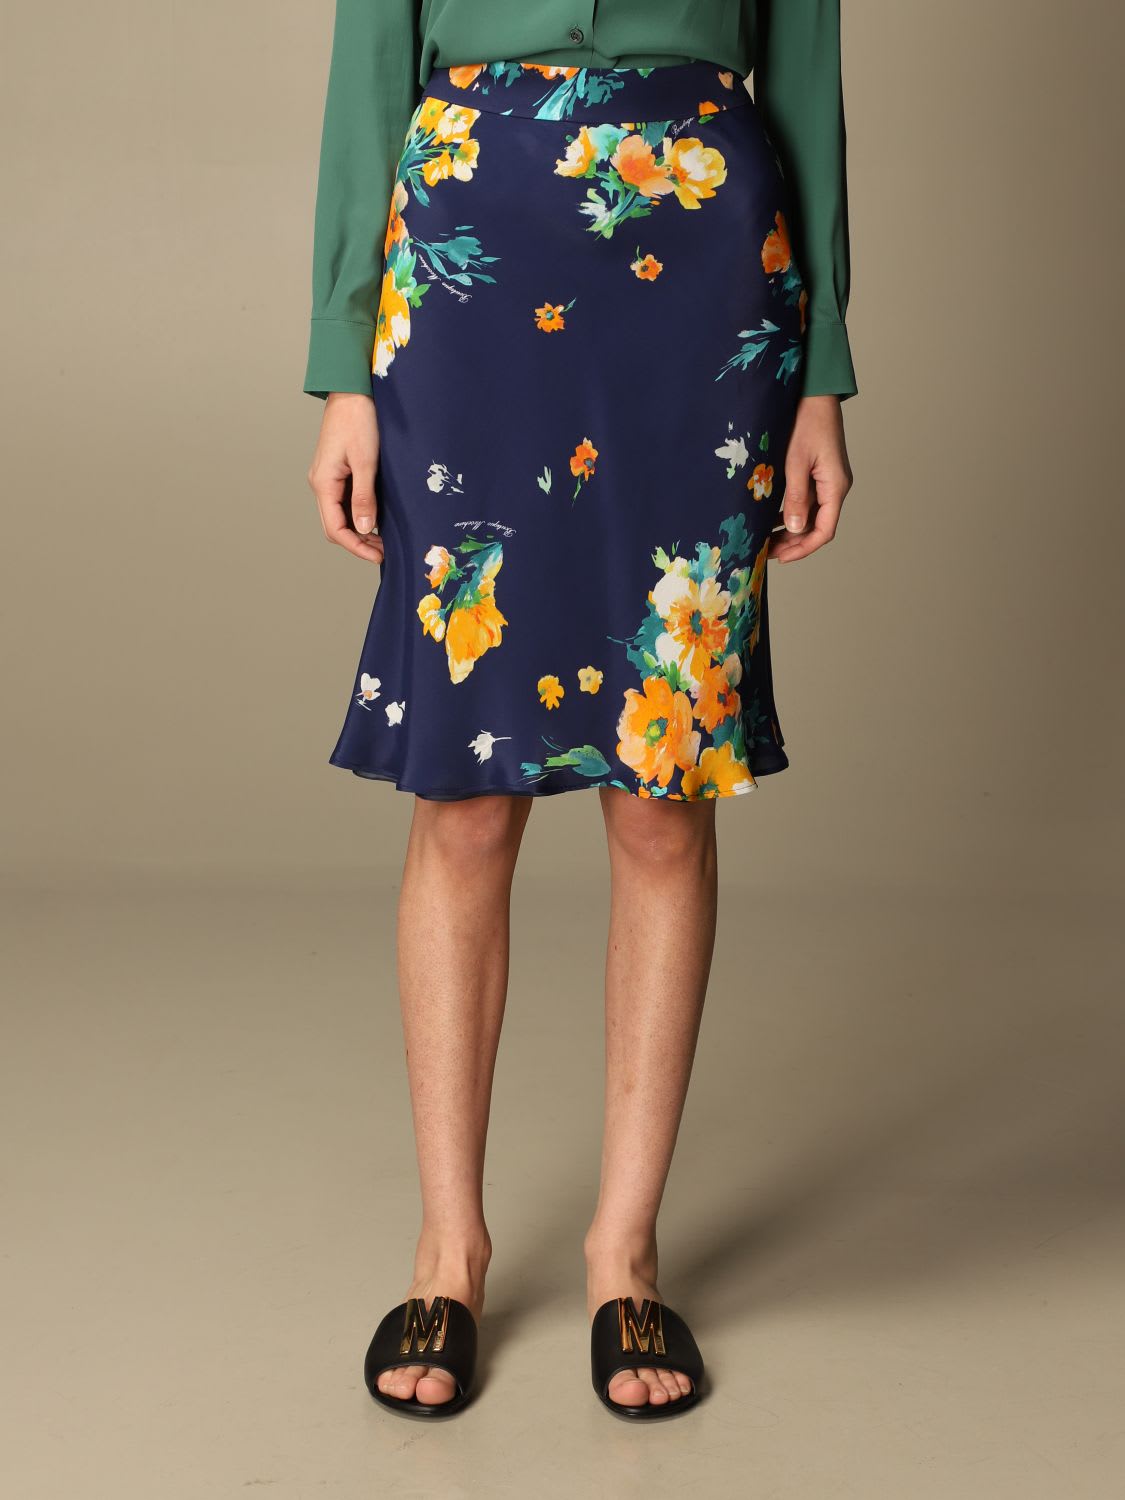 Boutique Moschino Skirt Floral Print Silk Sheath Dress Boutique Moschino